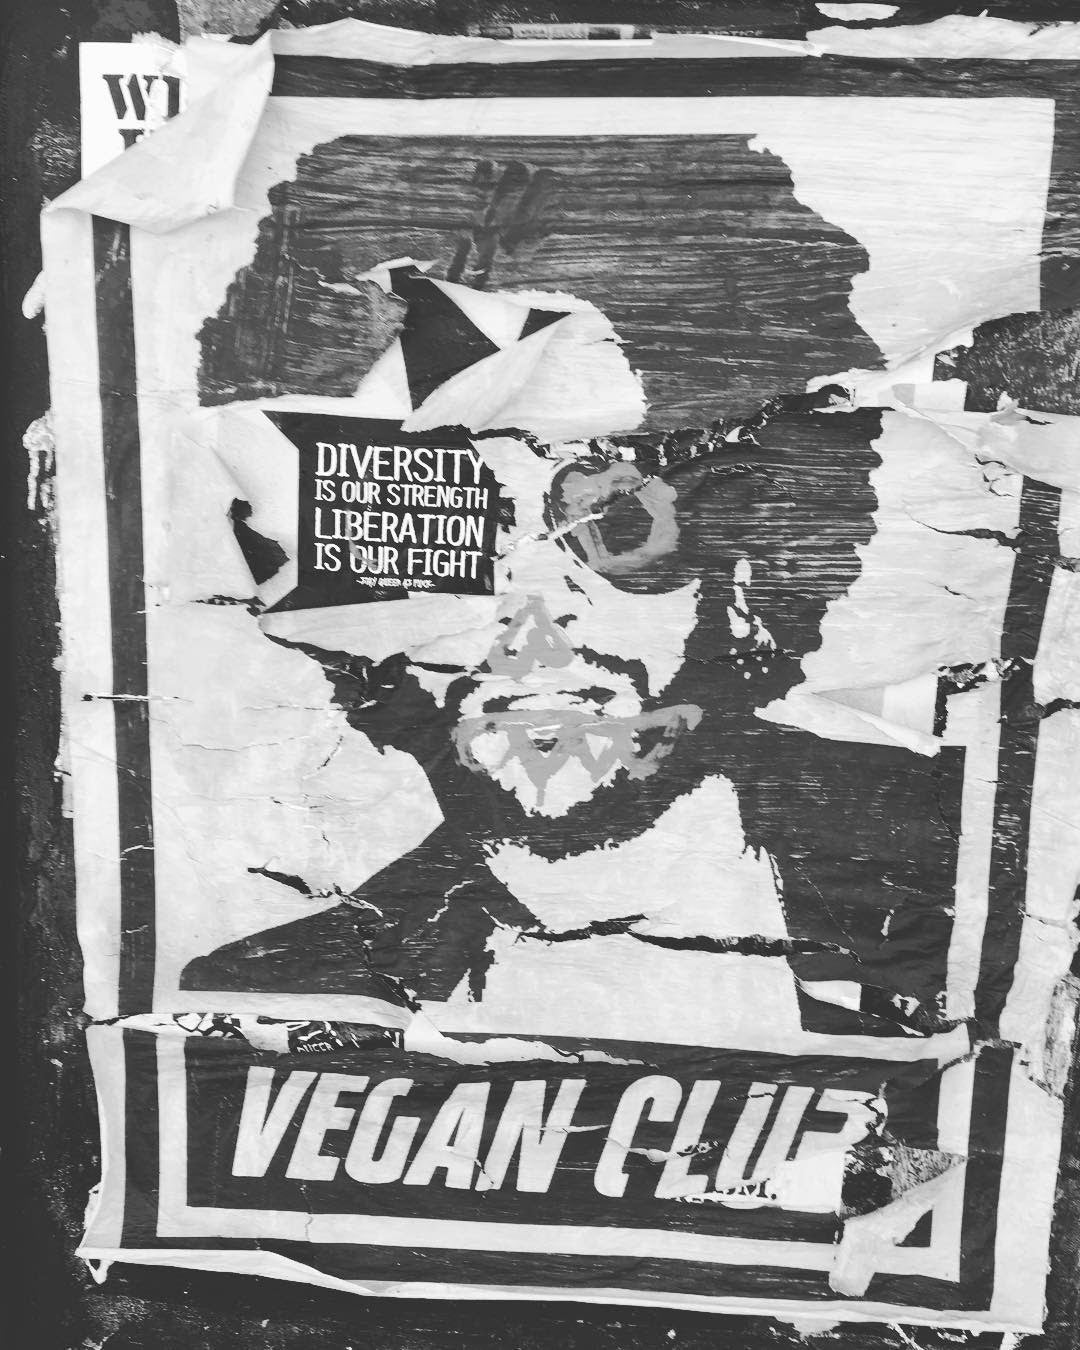 Street Art NewsPrint Poster Vegan Club featuring Lenny Kravitz - pic by @violetresin